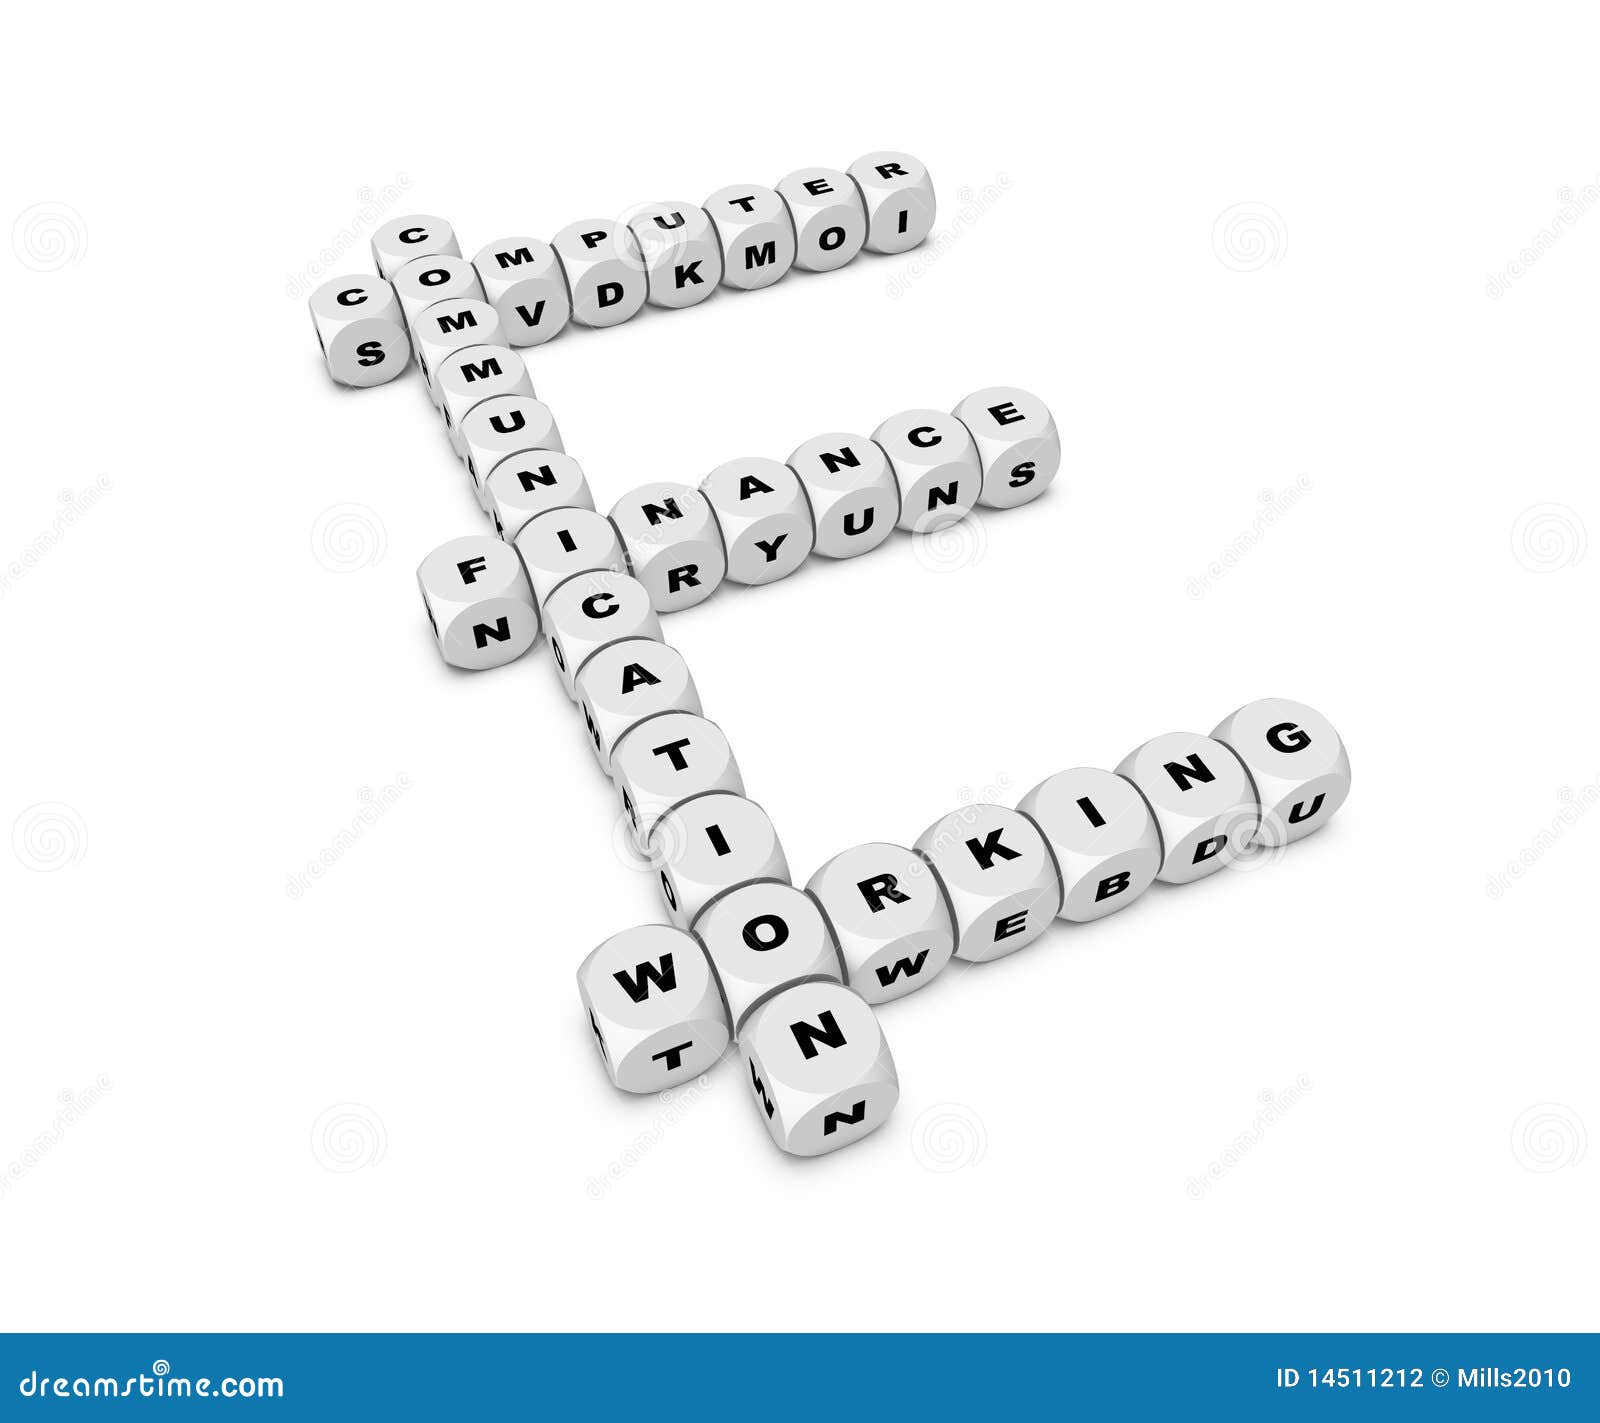 Crossword stock illustration. Illustration of block, finance - 14511212